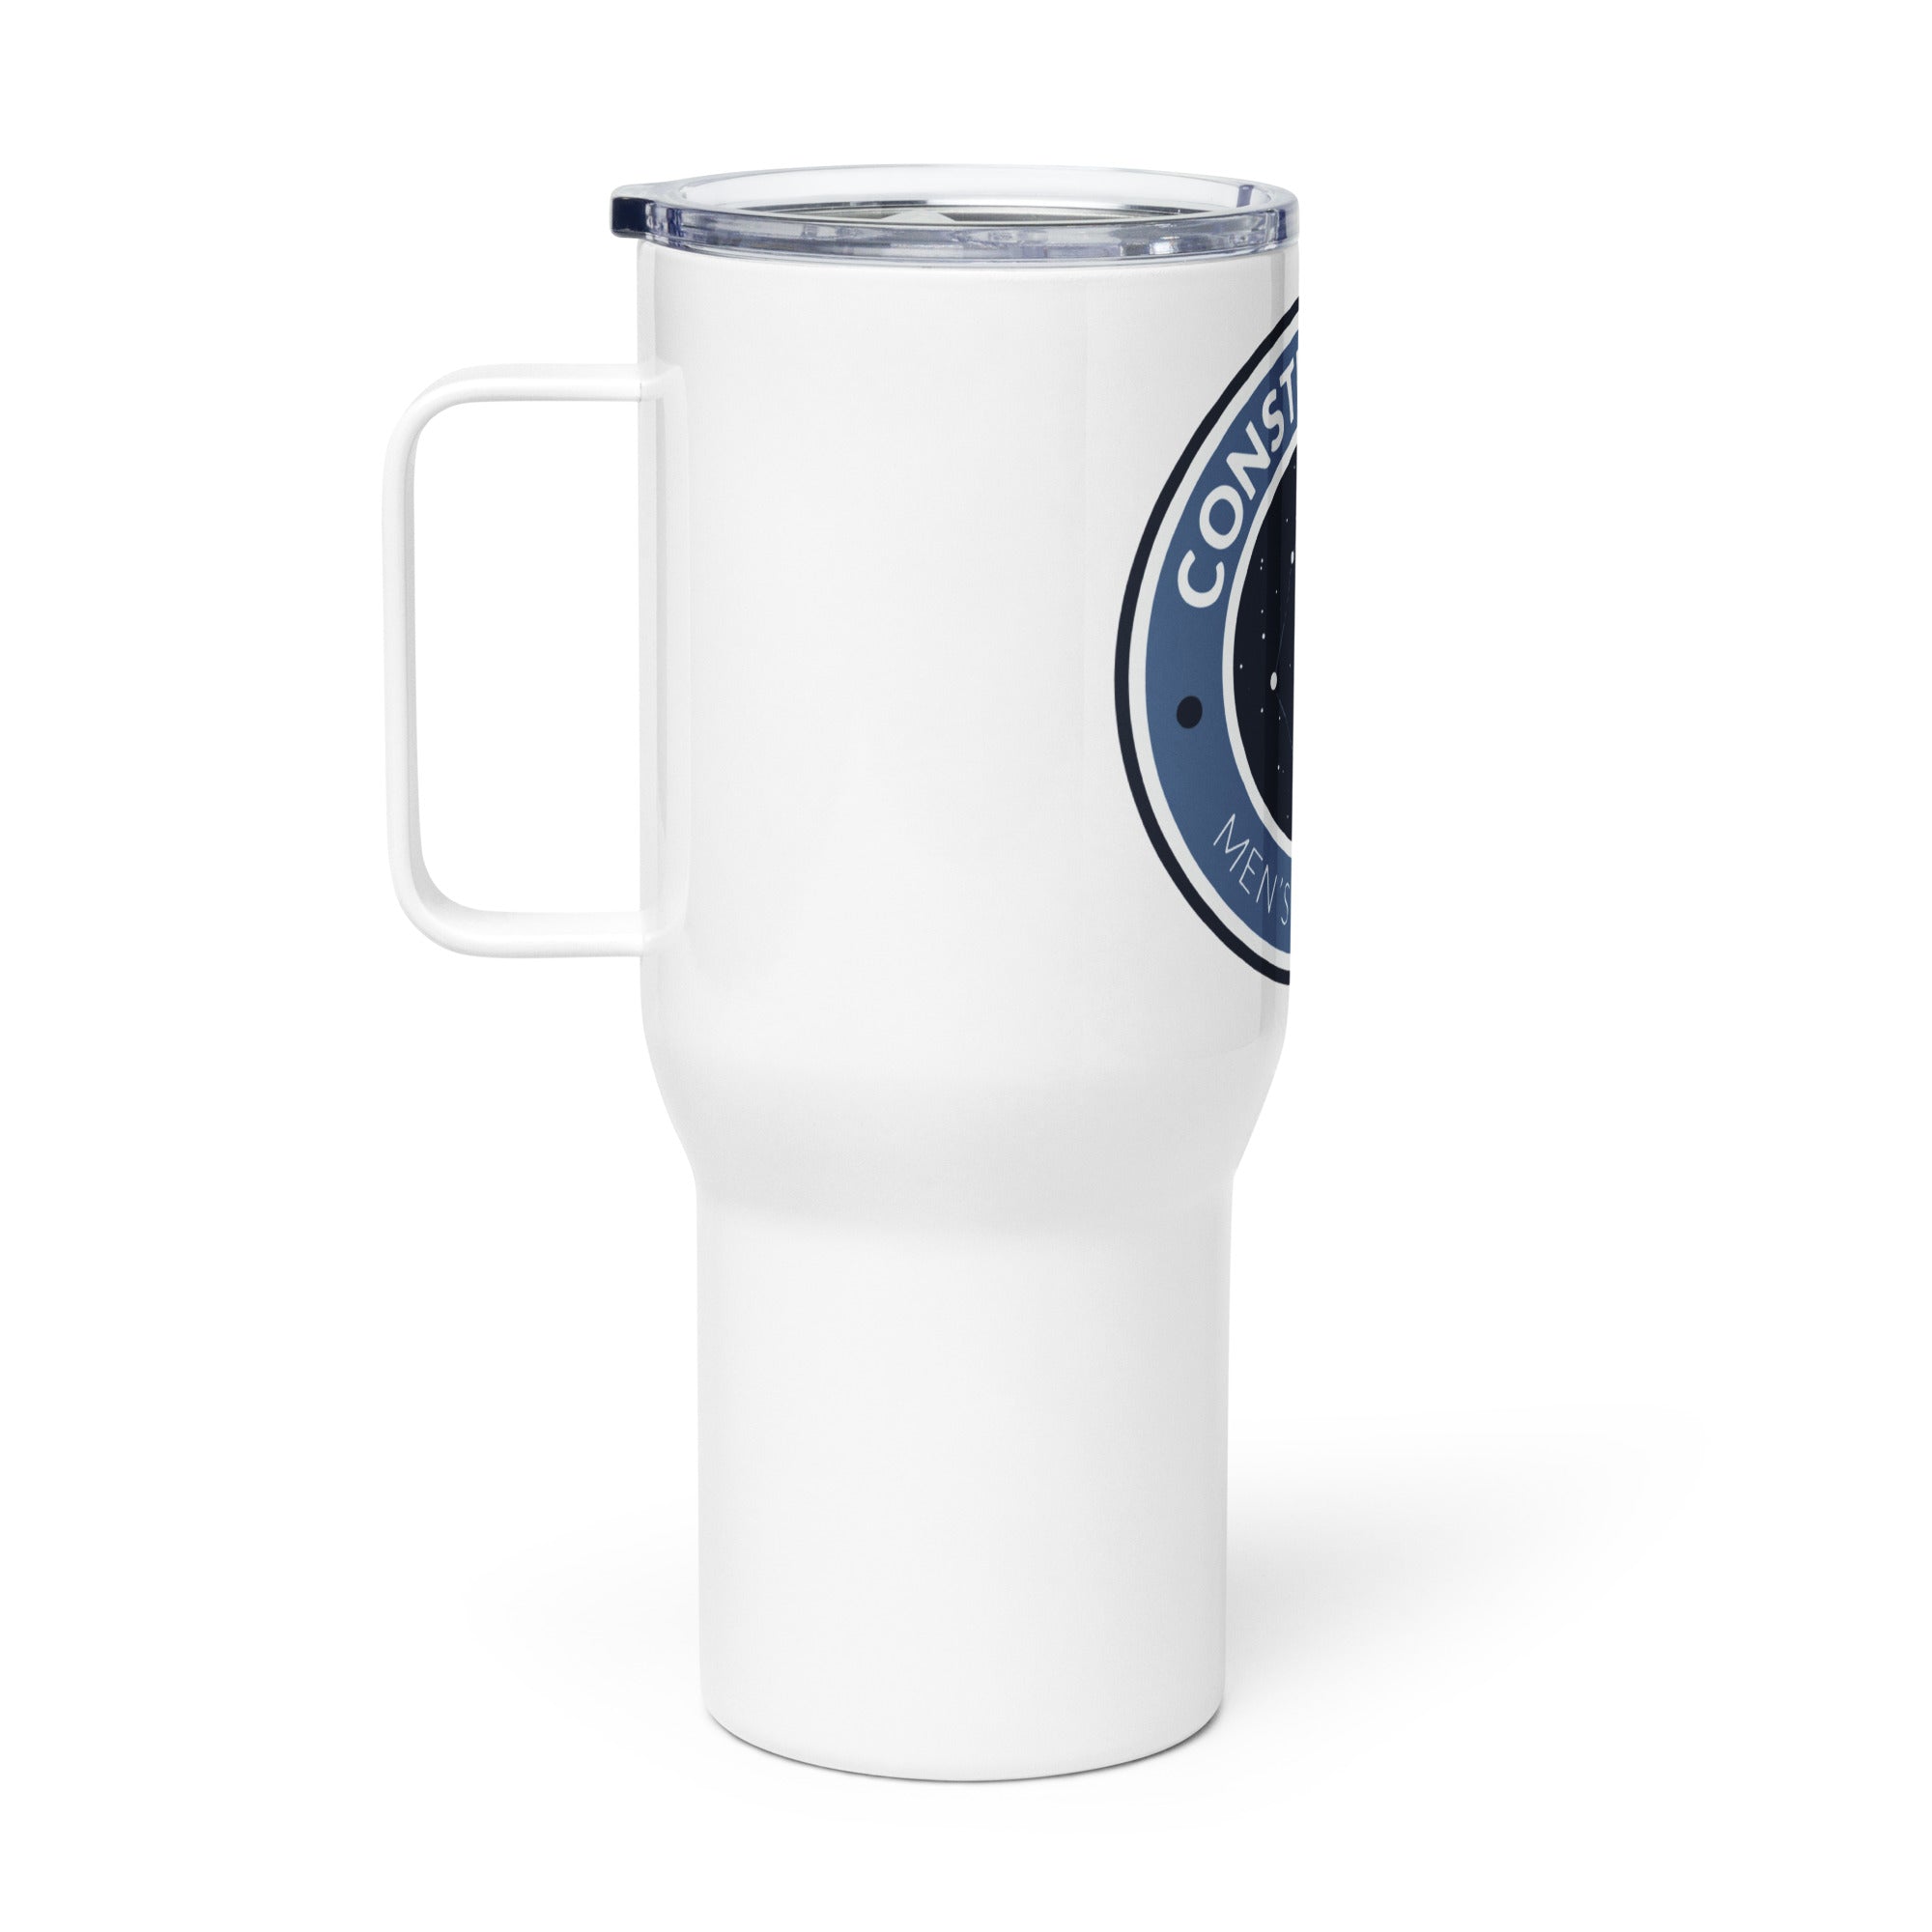 CME Travel mug with a handle